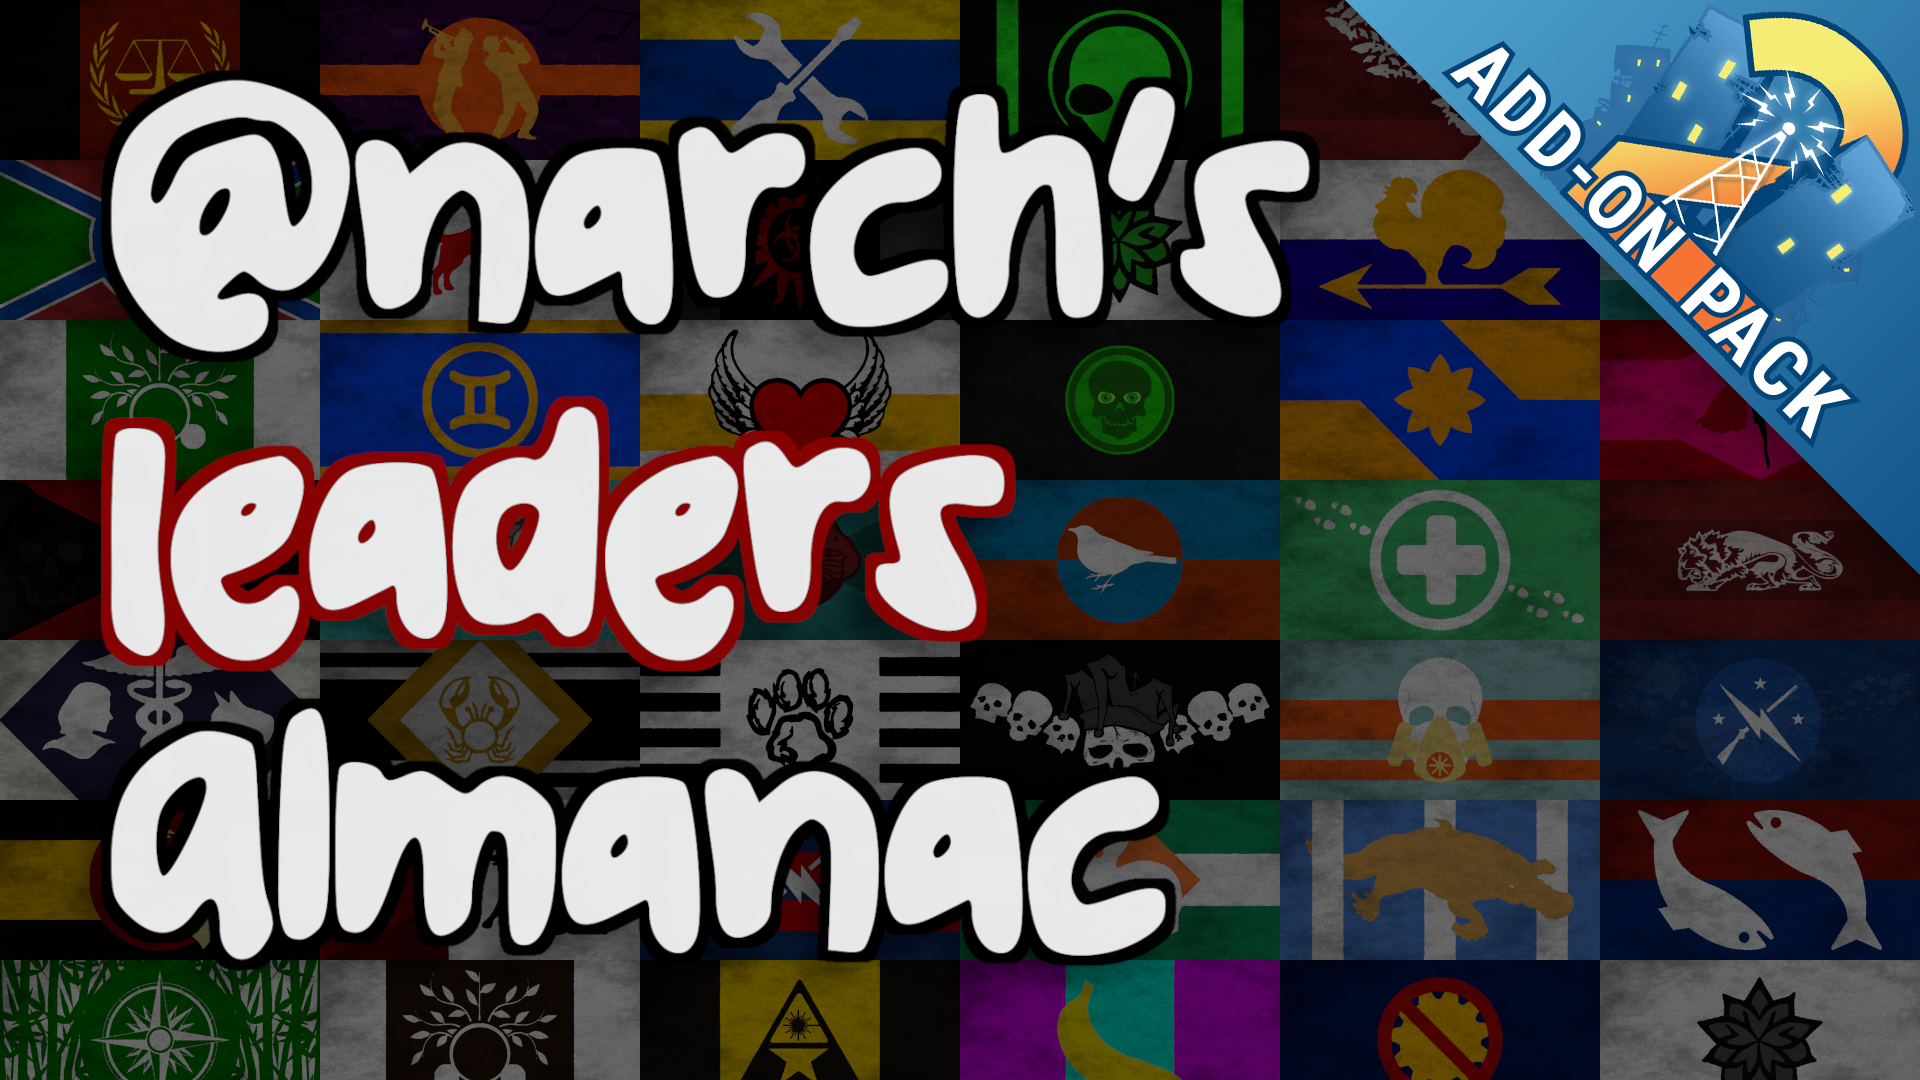 addon-anarchs-leaders-almanac.png